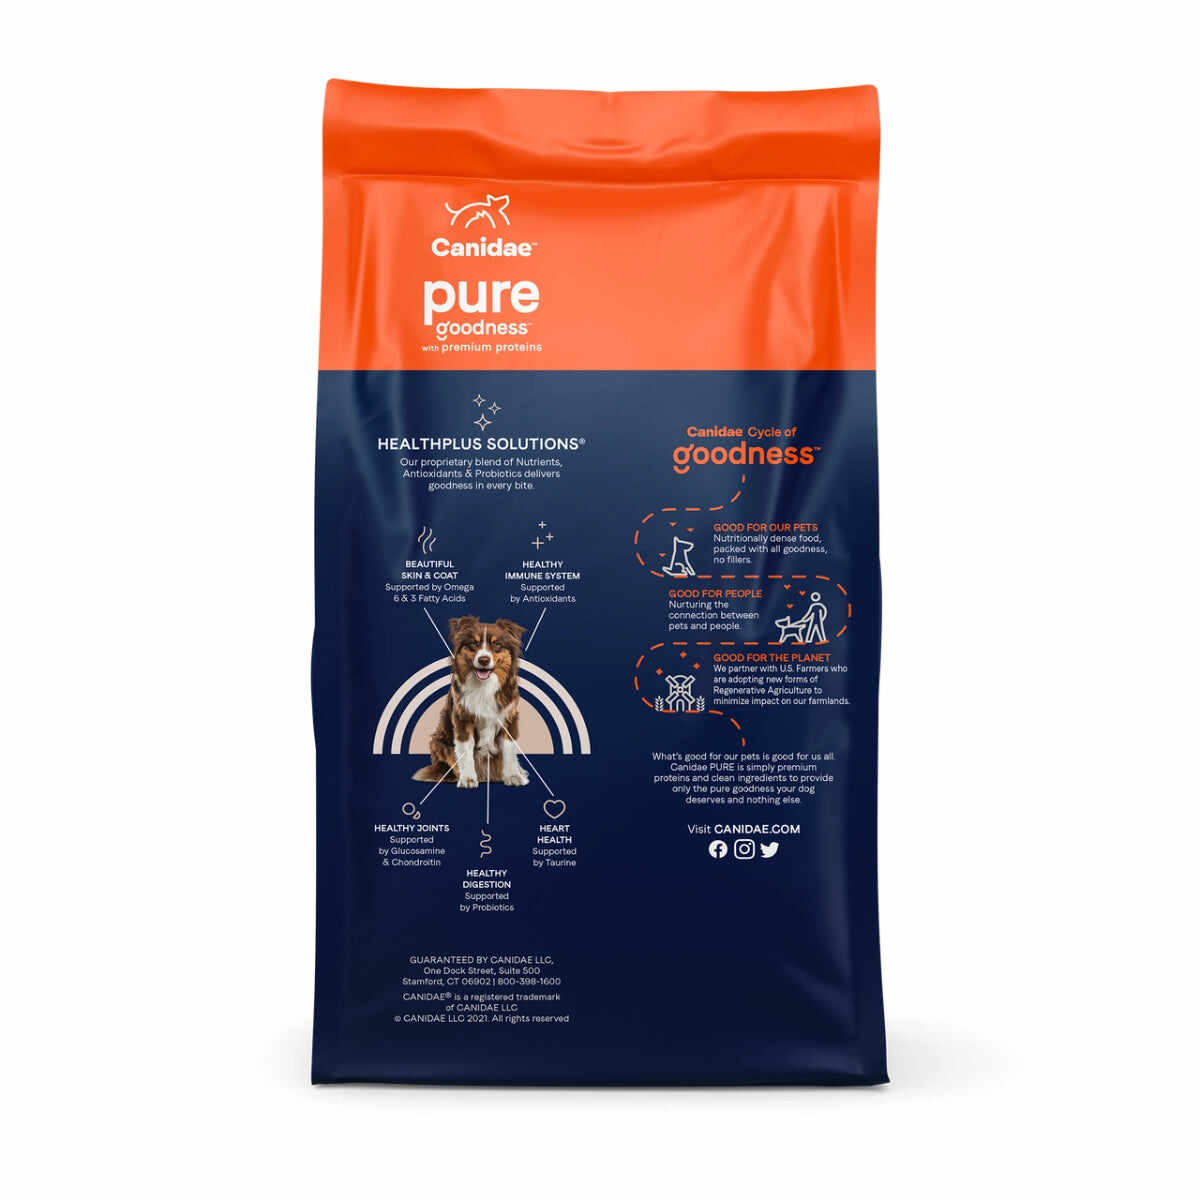 Canidae PURE Grain Free Dry Dog Food - Lamb & Pea